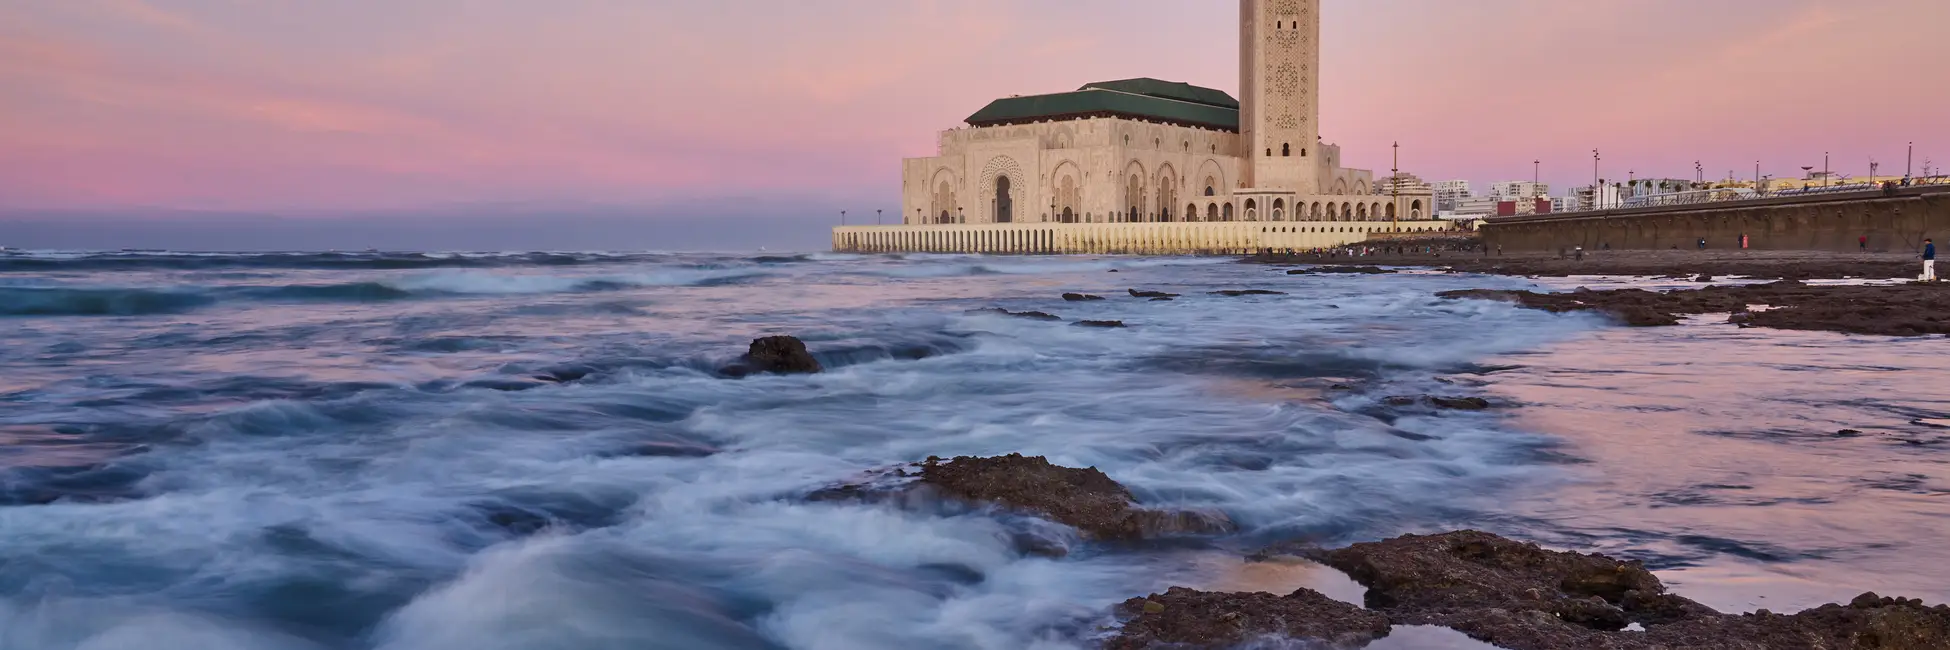 La belle Mosquée Hassan II au Maroc 